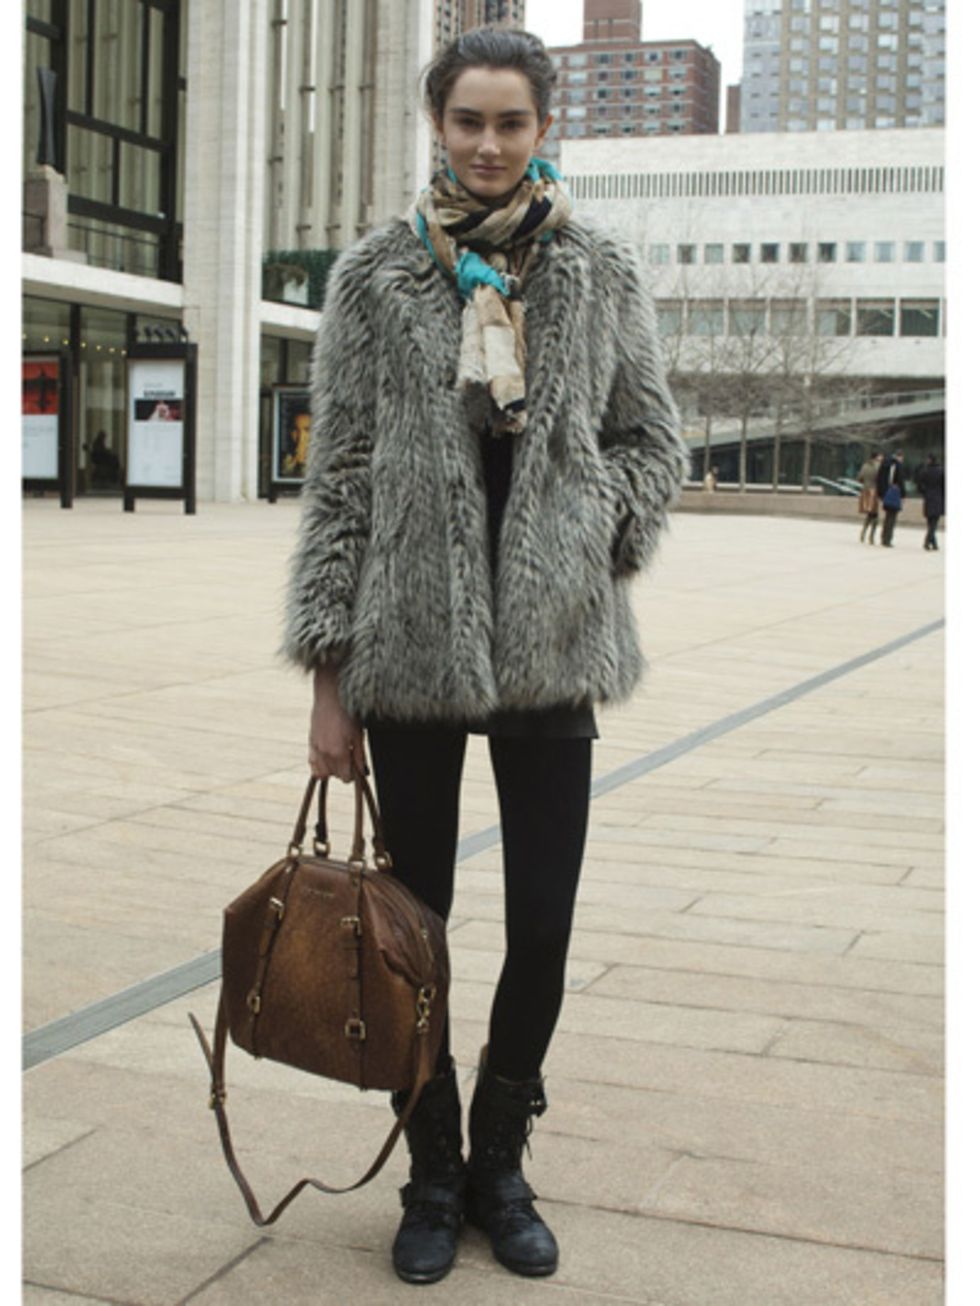 Brown, Textile, Outerwear, Bag, Winter, Style, Street fashion, Street, Fashion accessory, Jacket, 